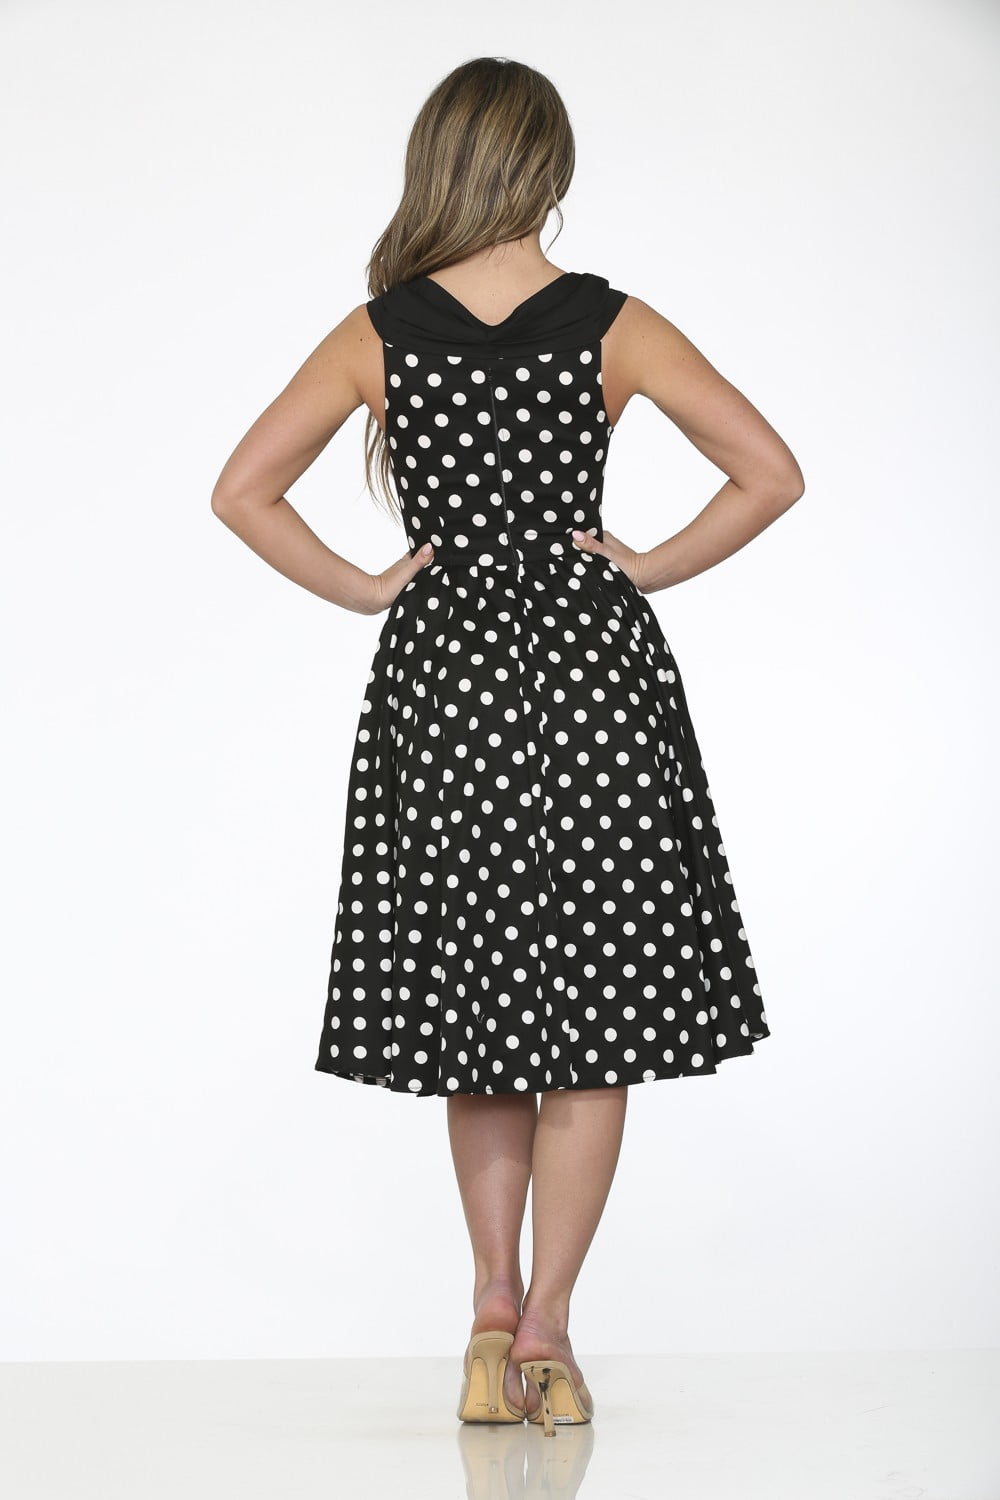 black and white polka dot dress